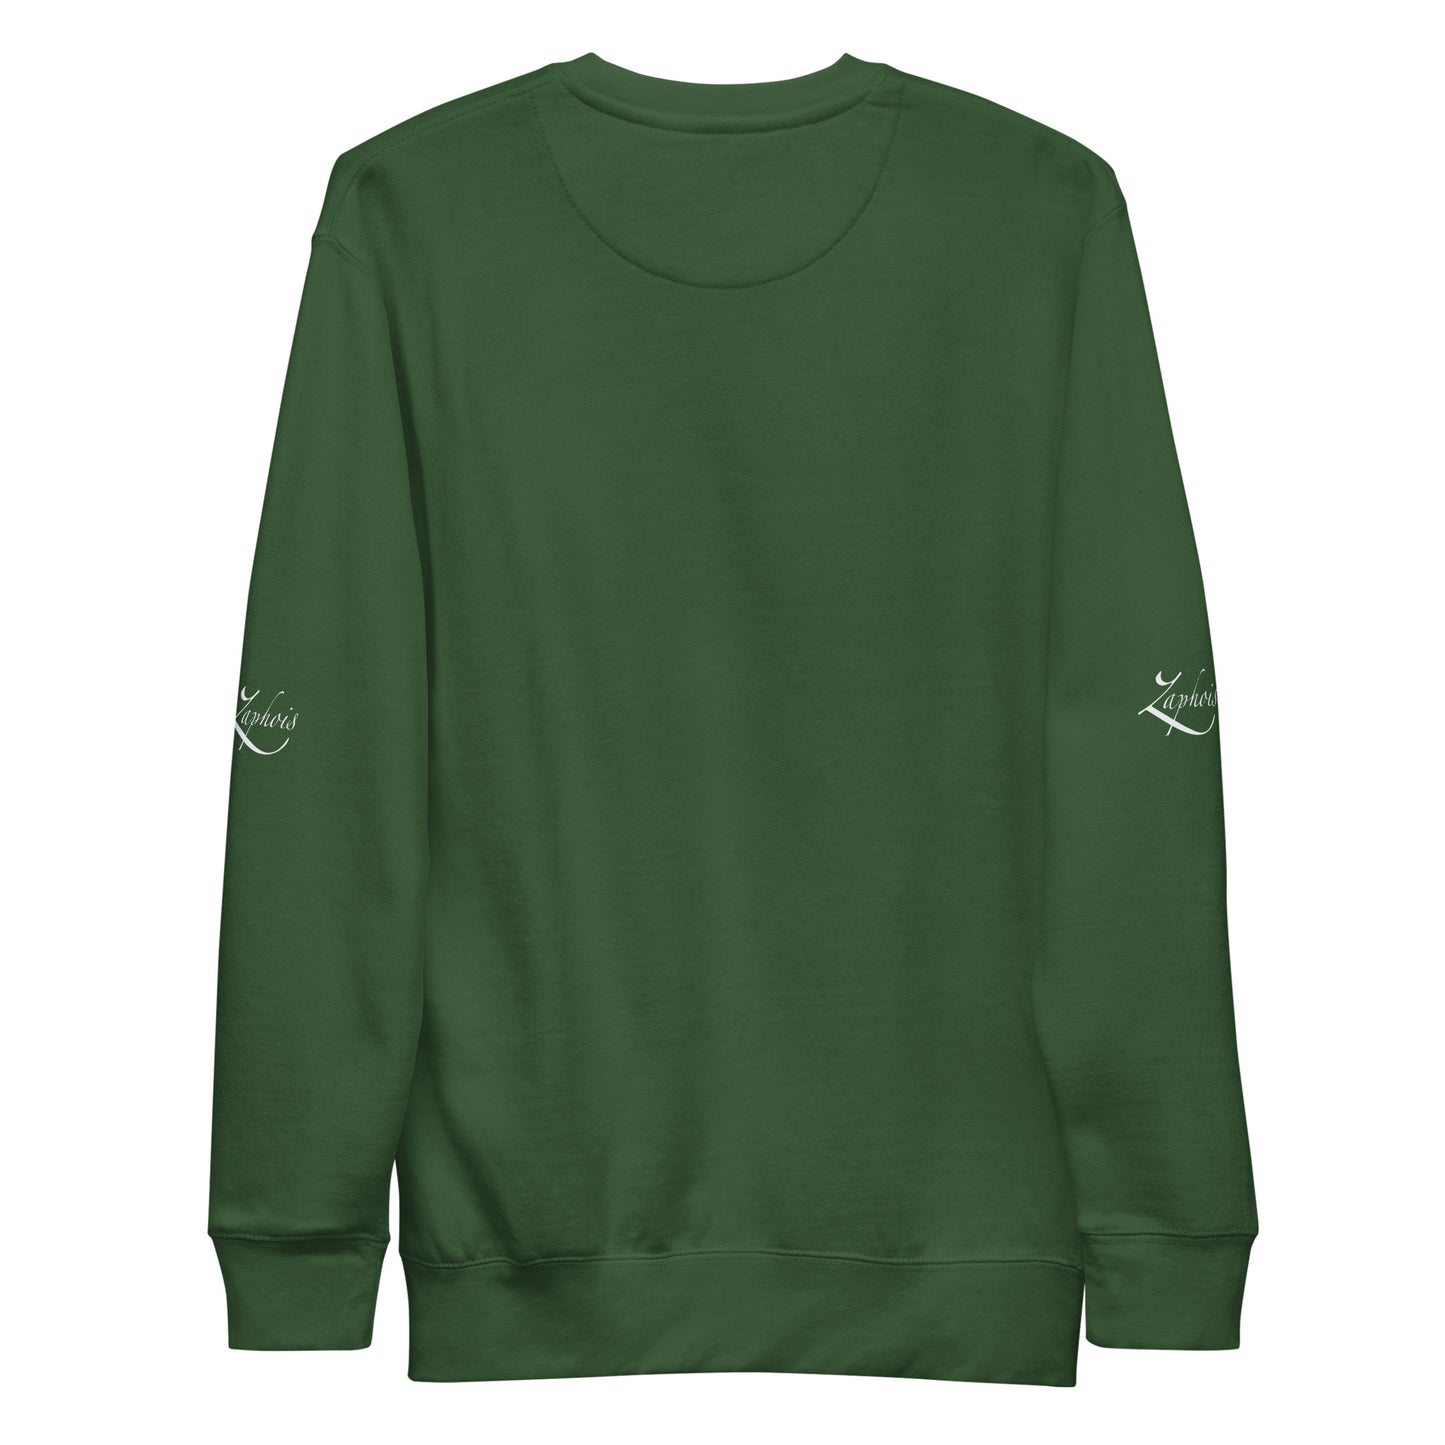 zaphois signature green warm shirt